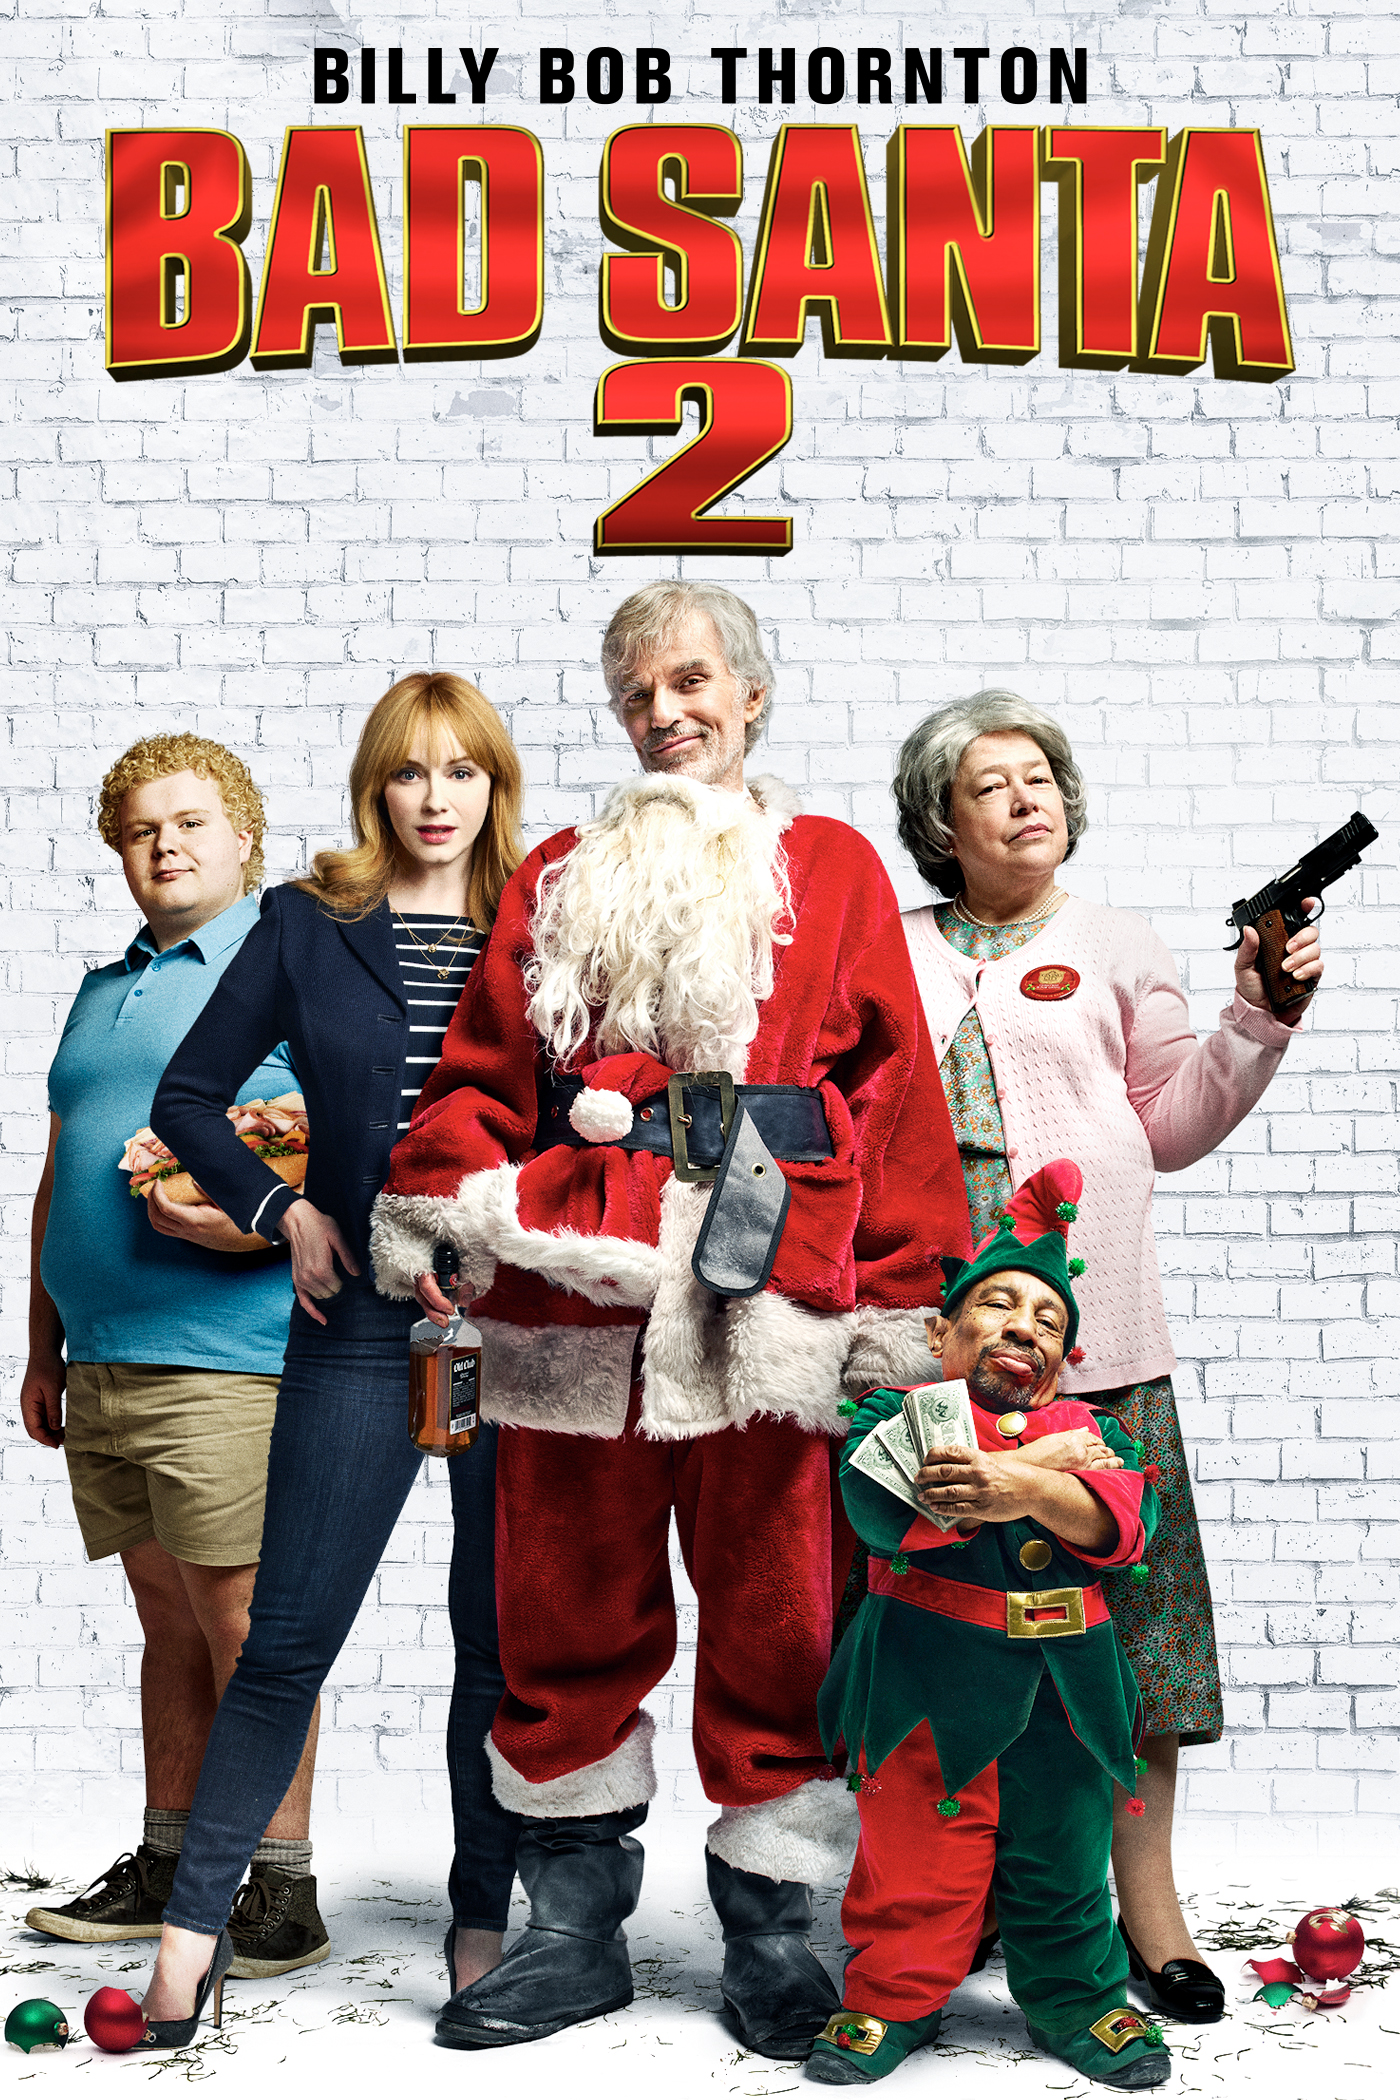 bad santa movie poster